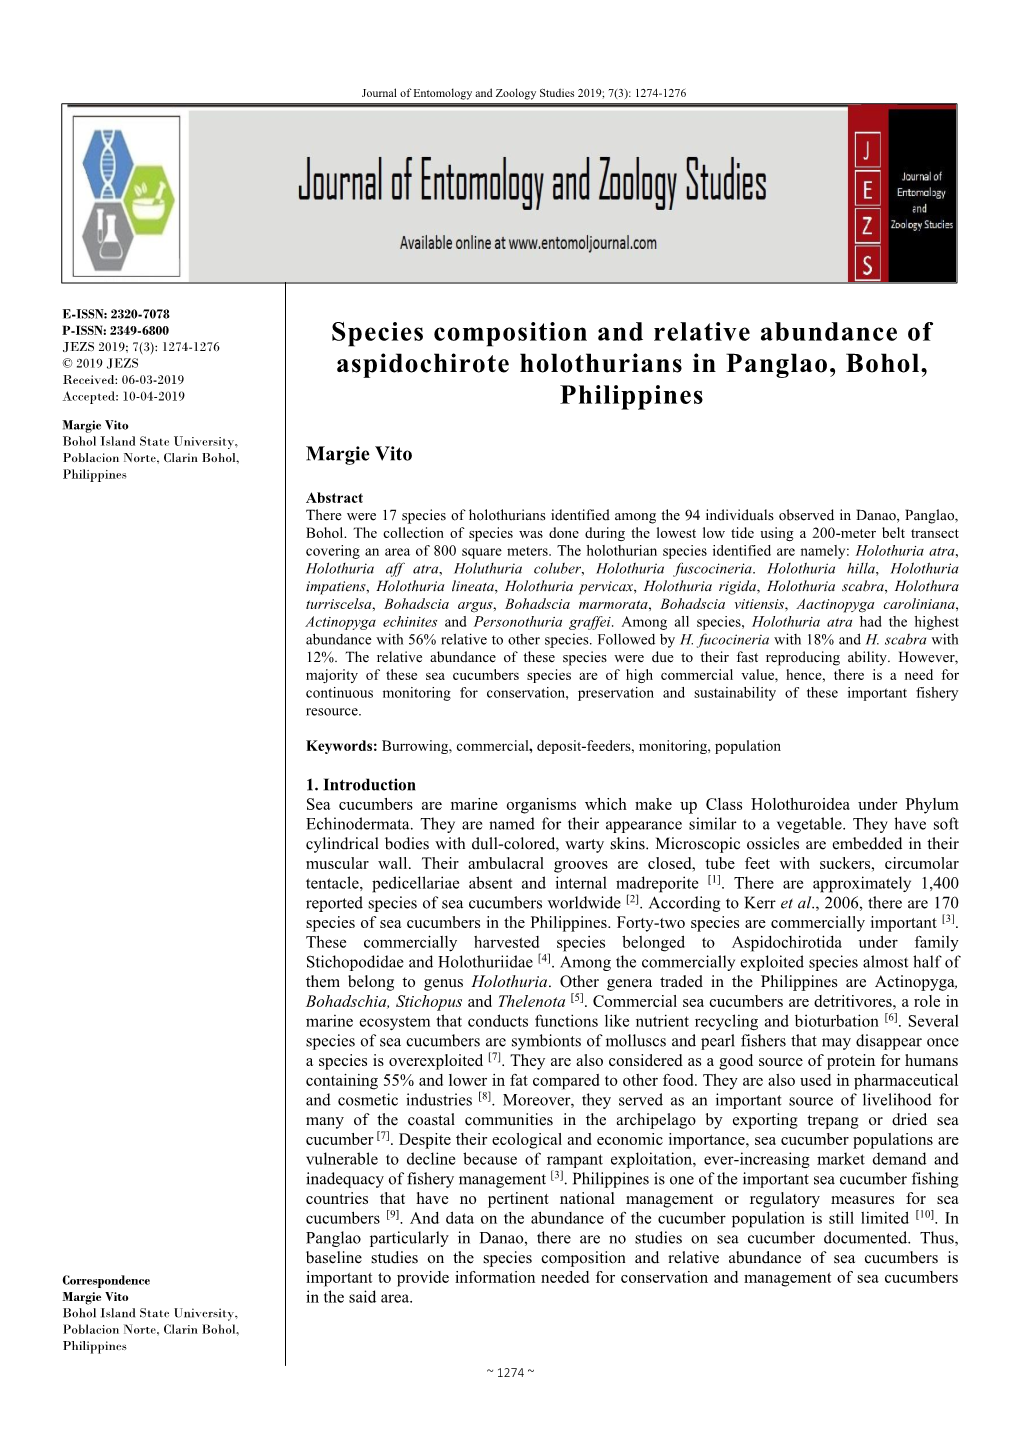 Species Composition and Relative Abundance of Aspidochirote